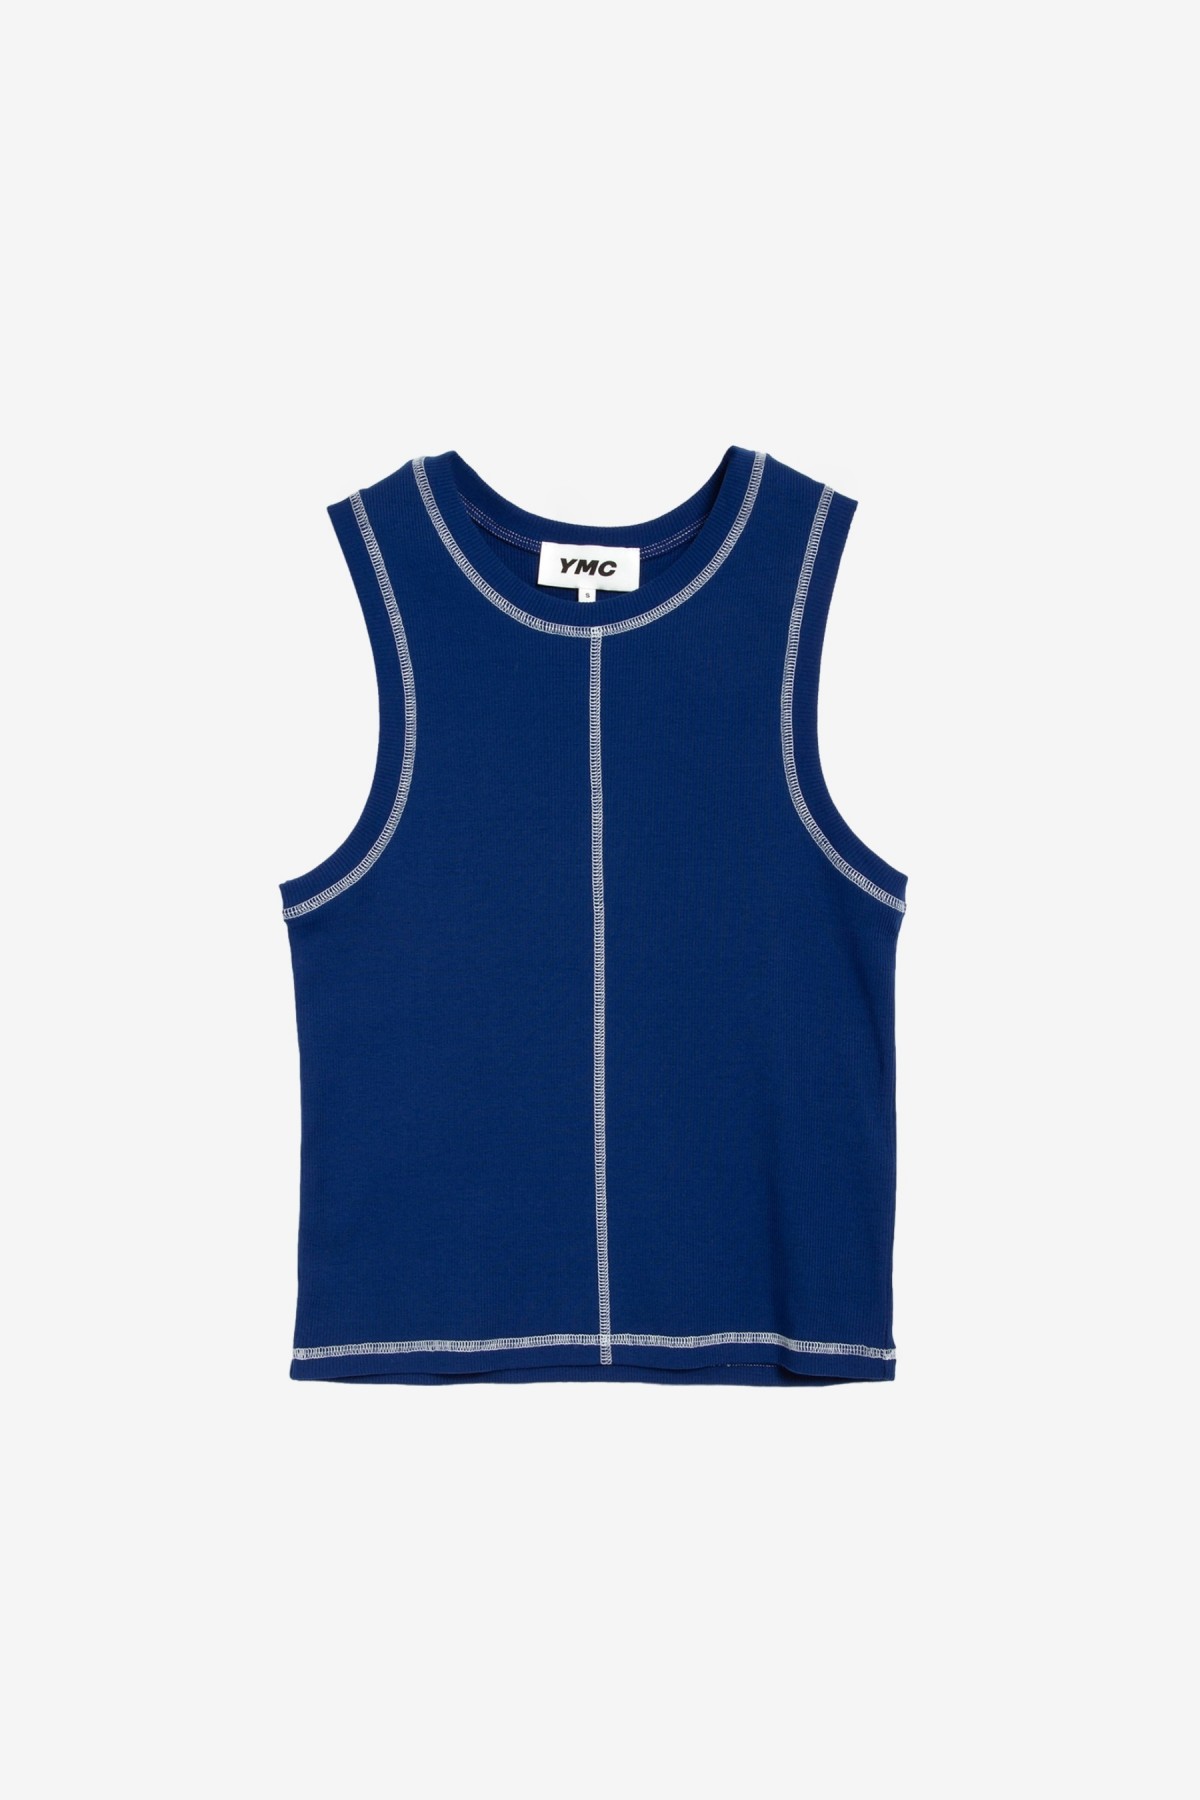 YMC You Must Create Dot Vest in Blue